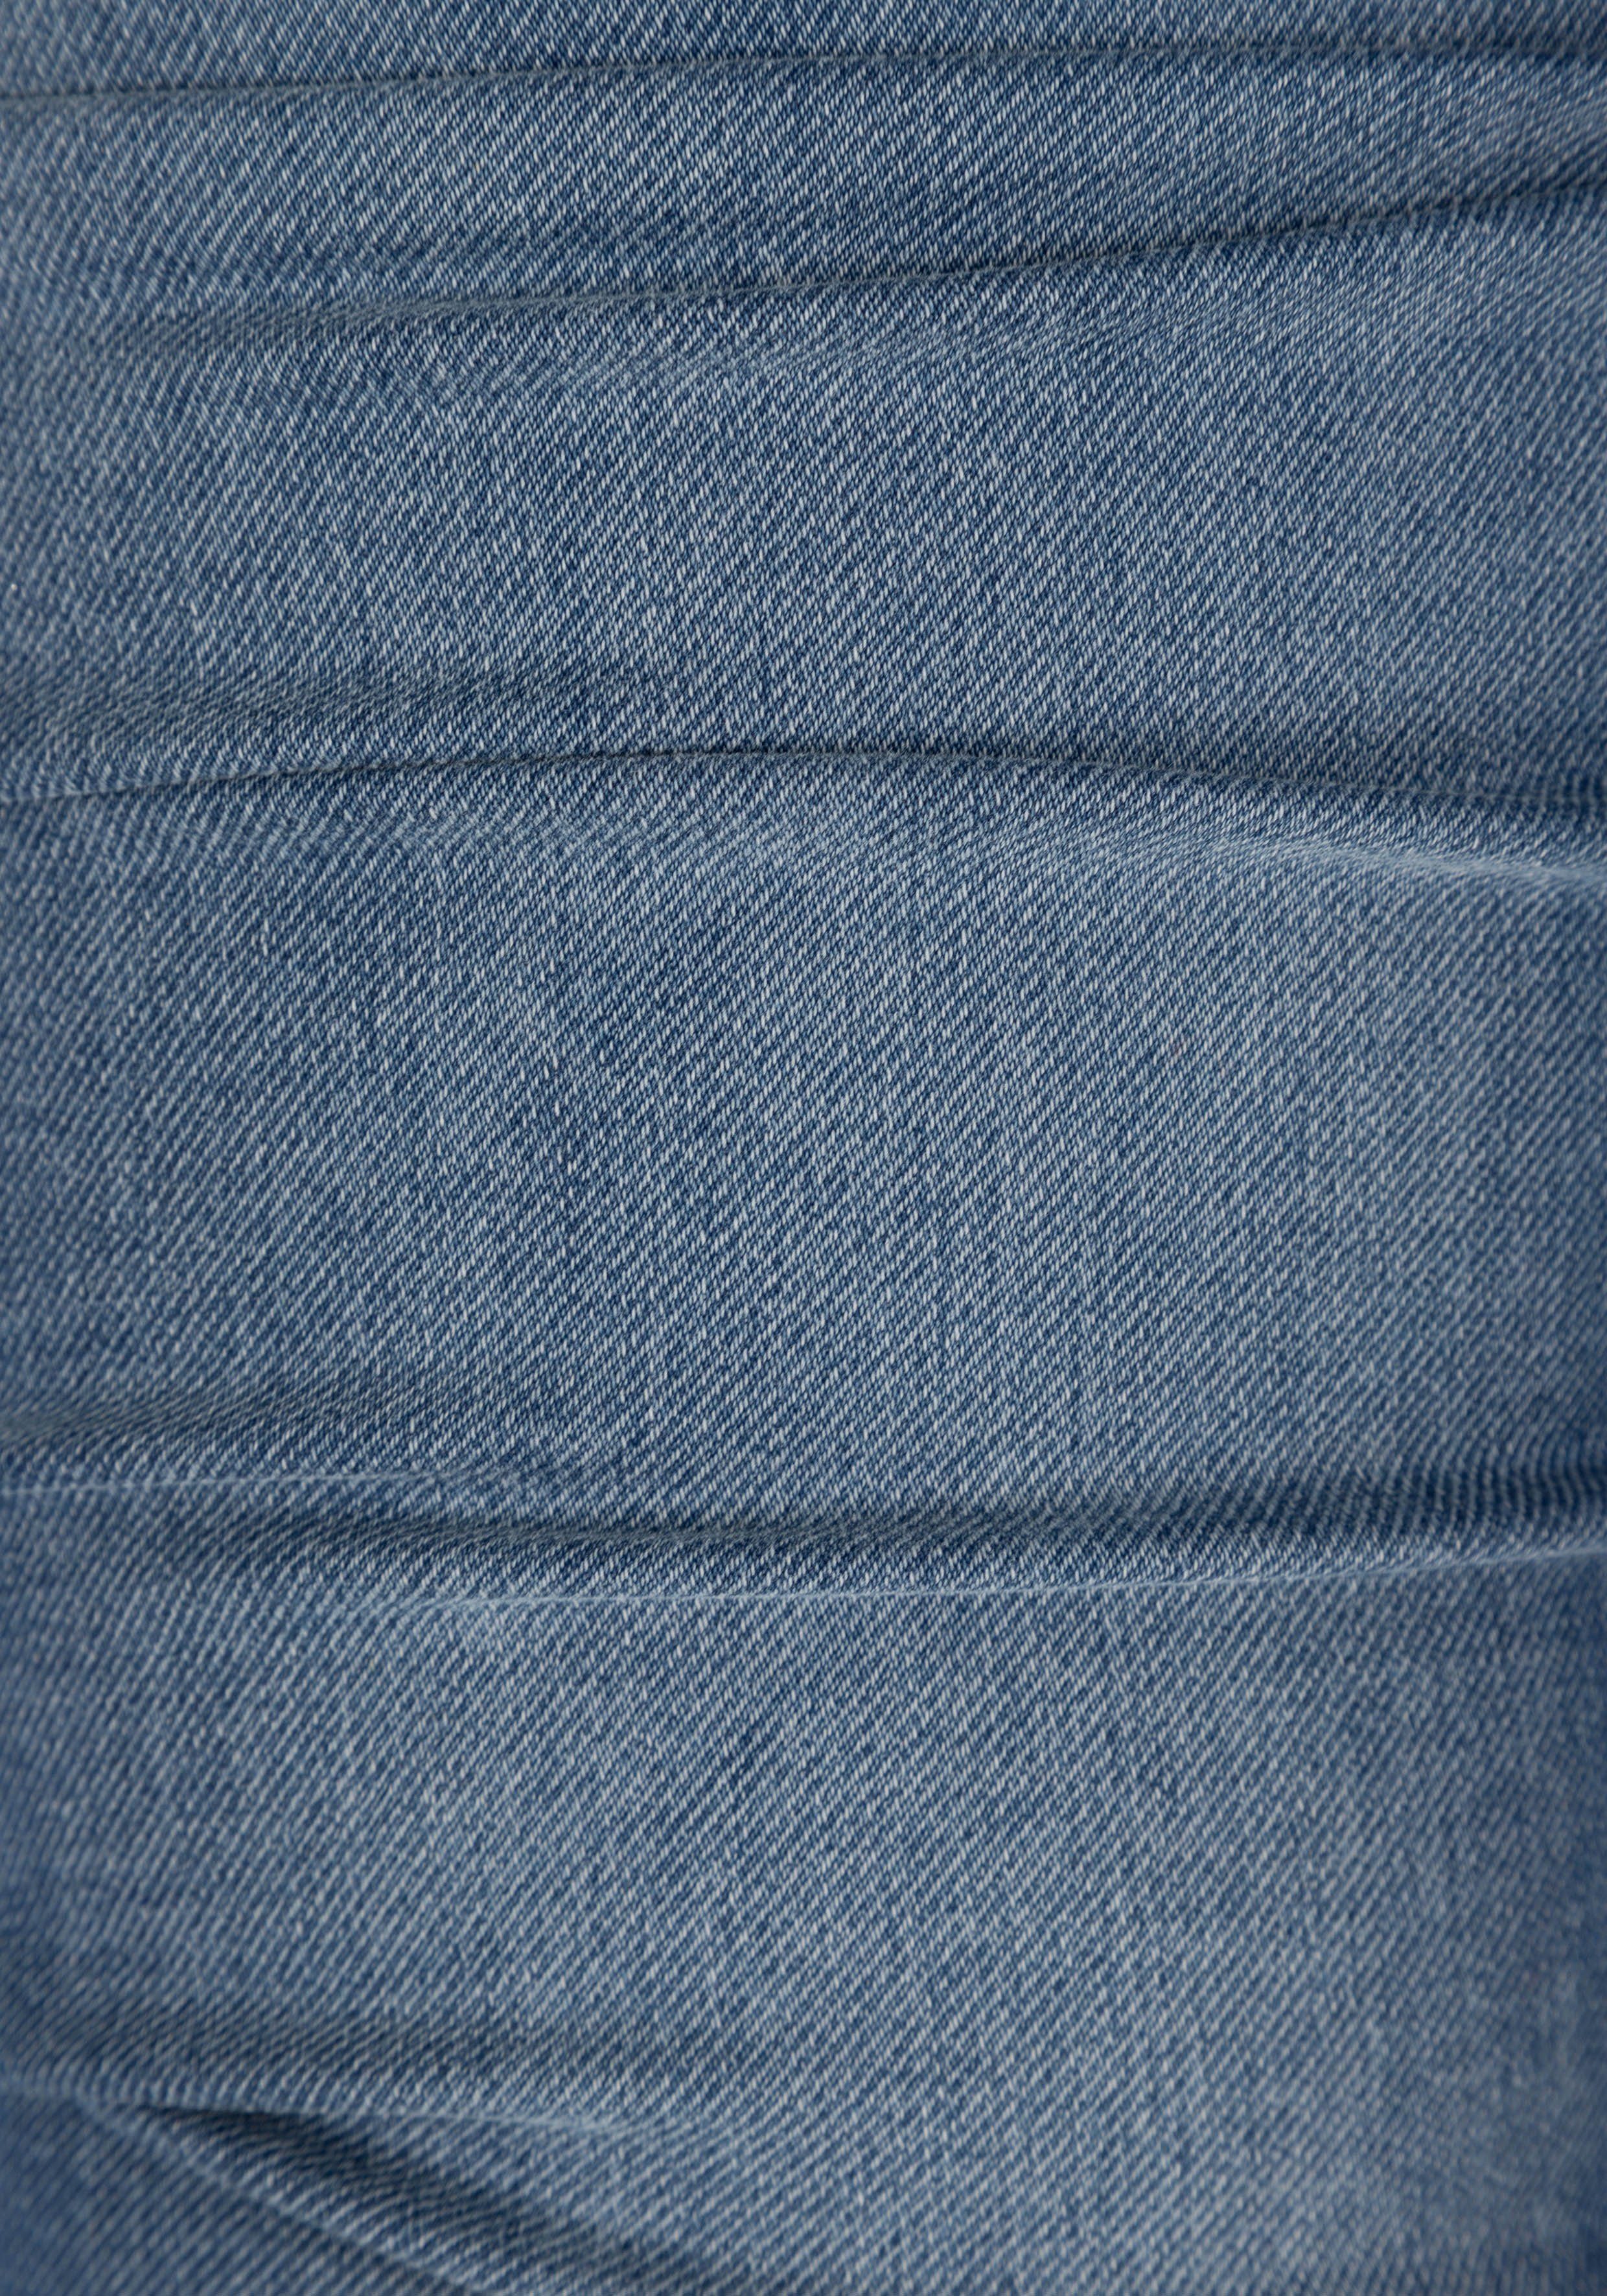 blau Tight Jogg AleenaTZ TIMEZONE 5-Pocket-Jeans